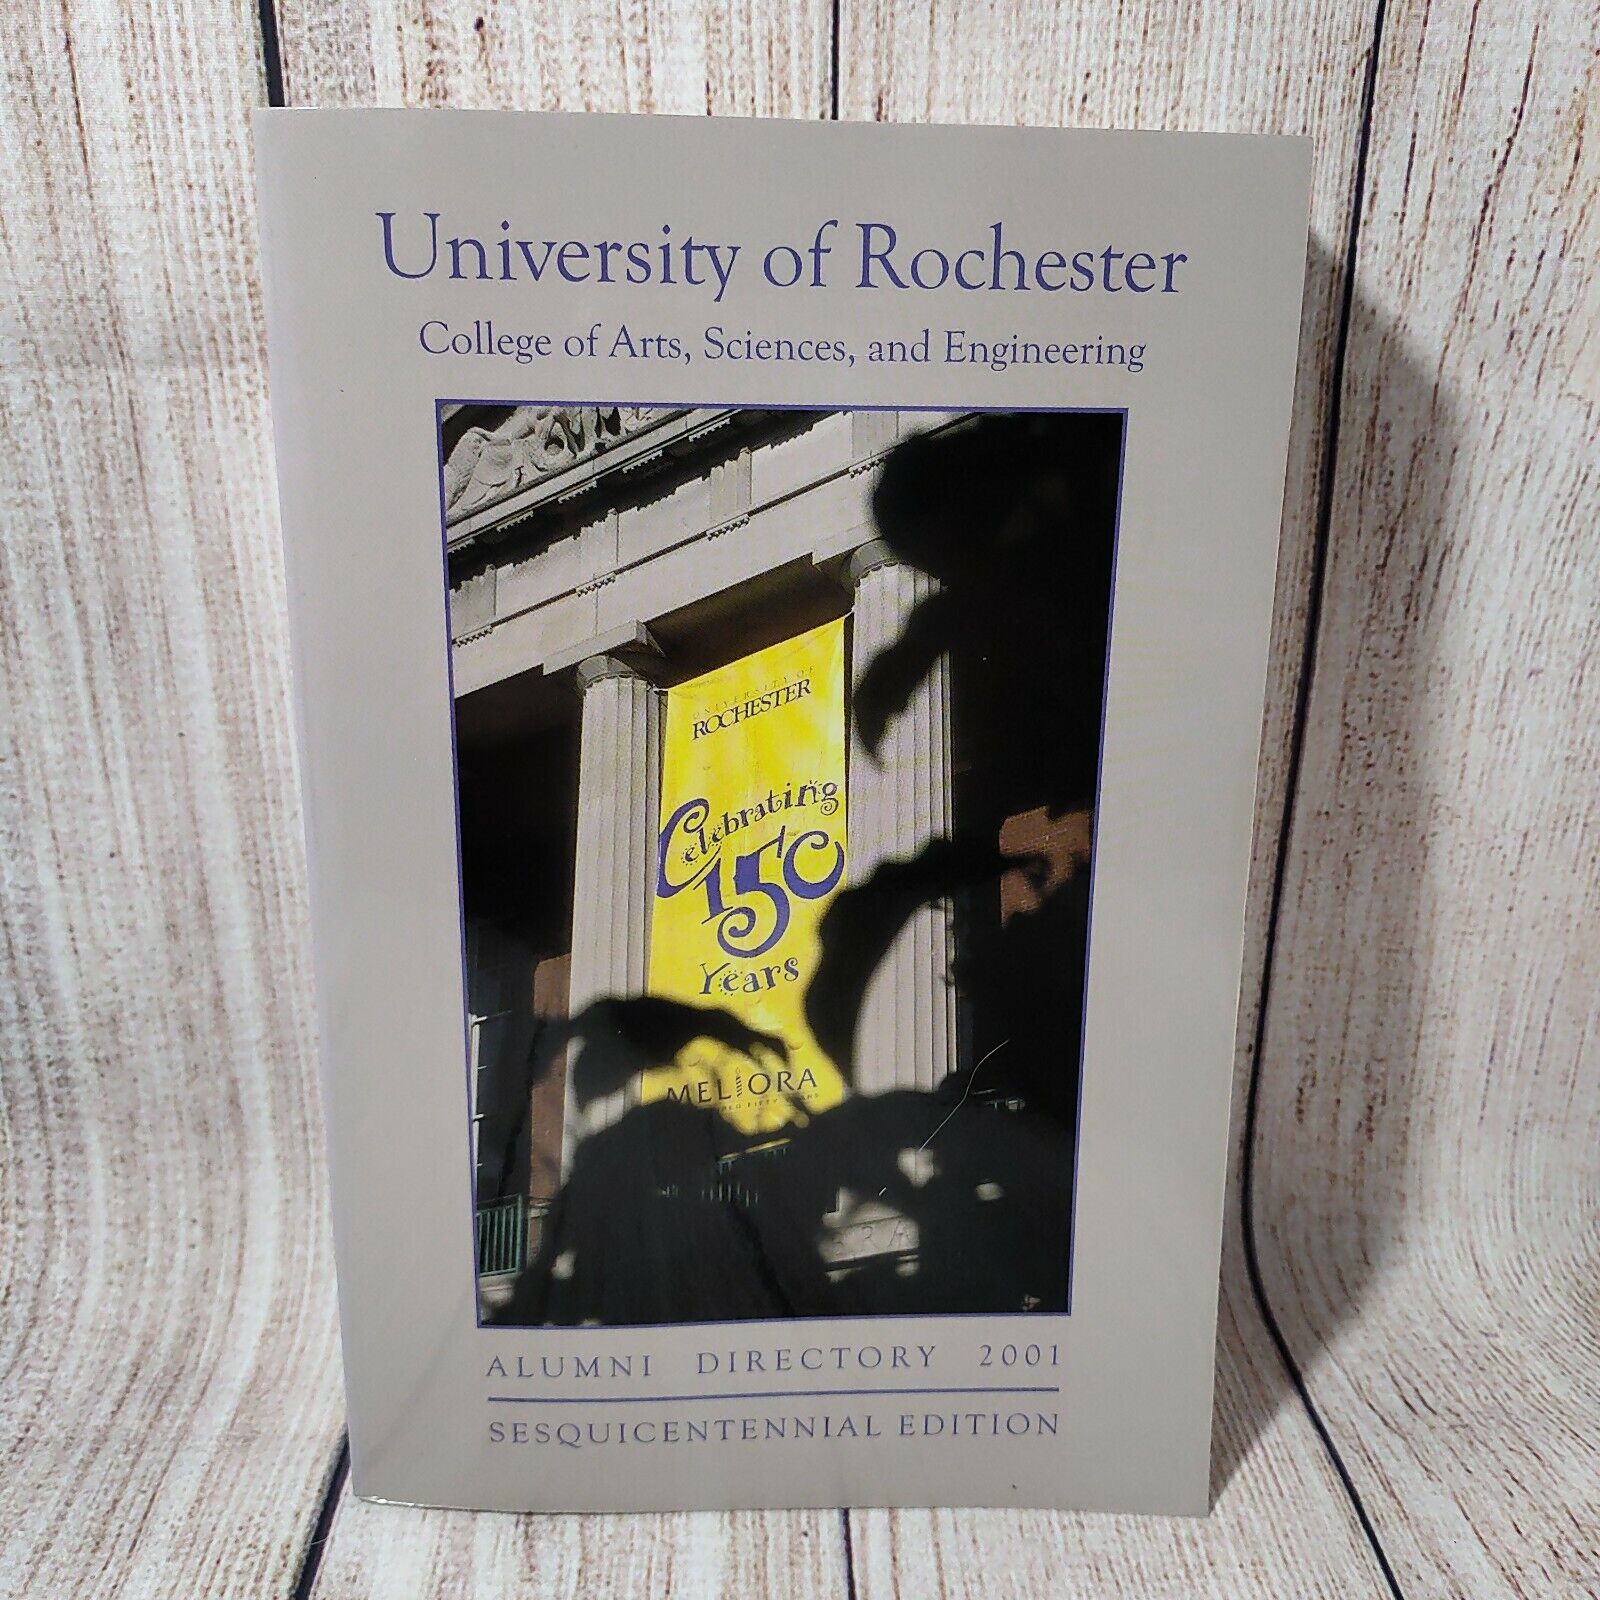 University of Rochester Alumni Directory 2001, Sesquicentennial Edition